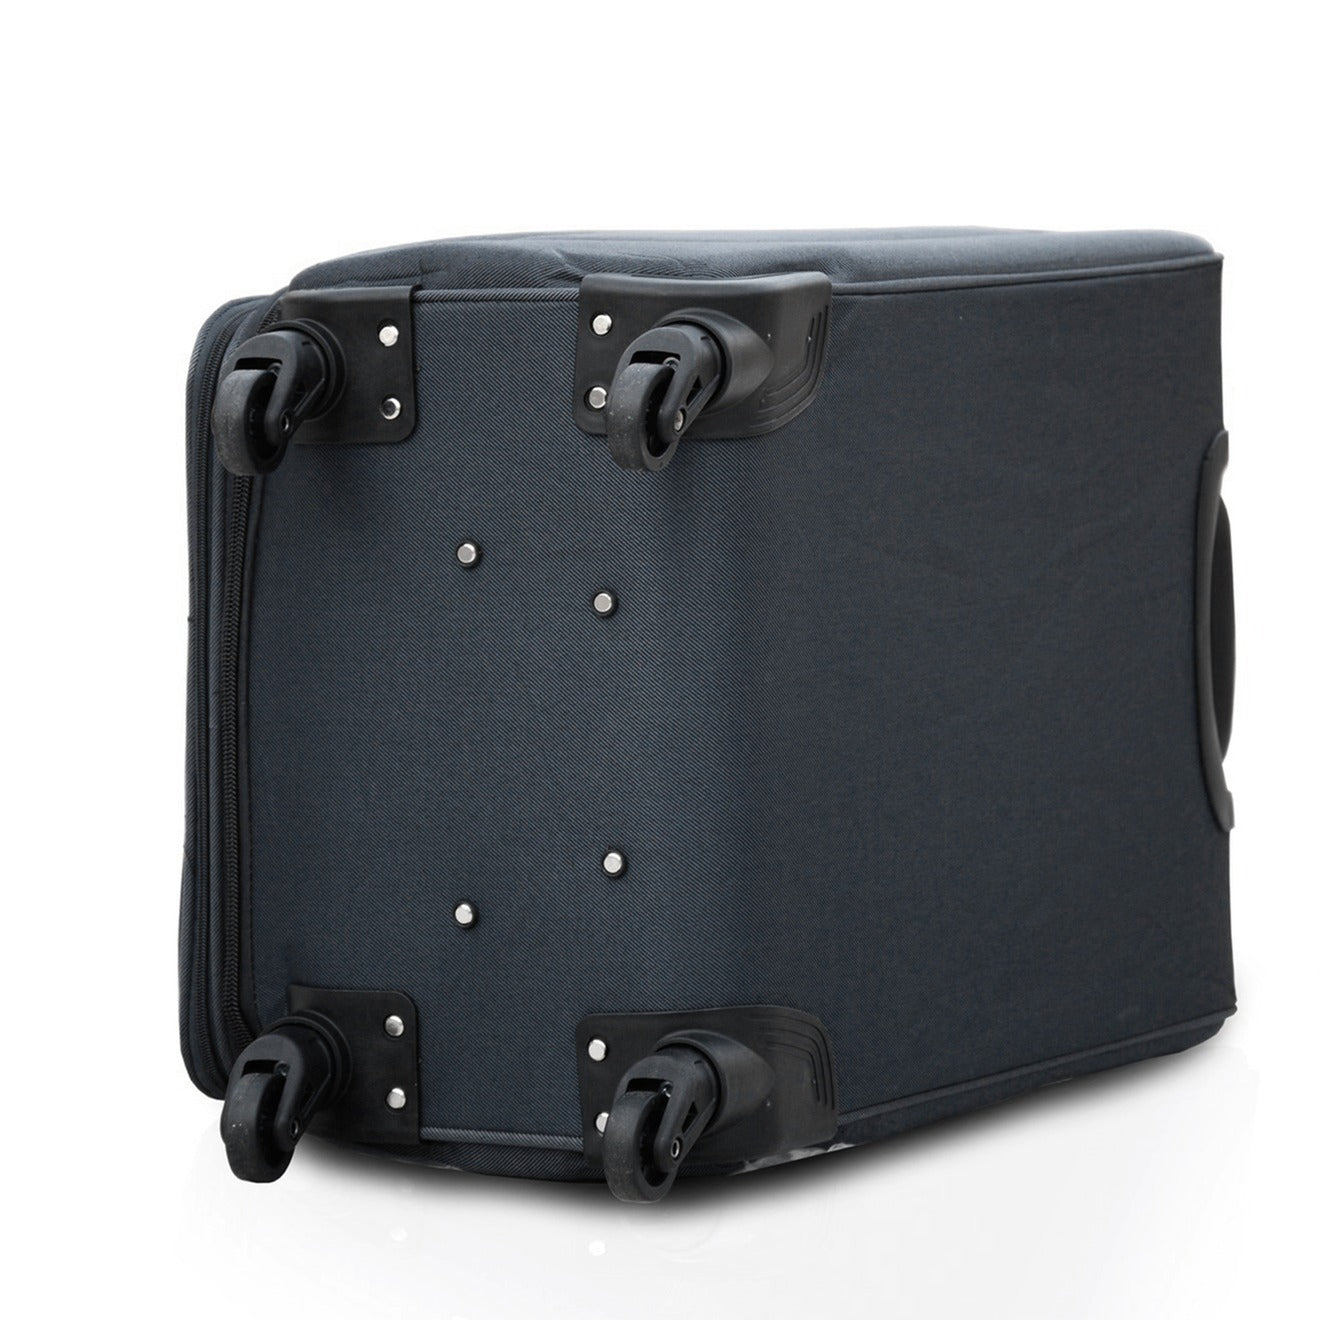 28" Black Colour SJ JIAN 4 Wheel Luggage Lightweight Soft Material Trolley Bag